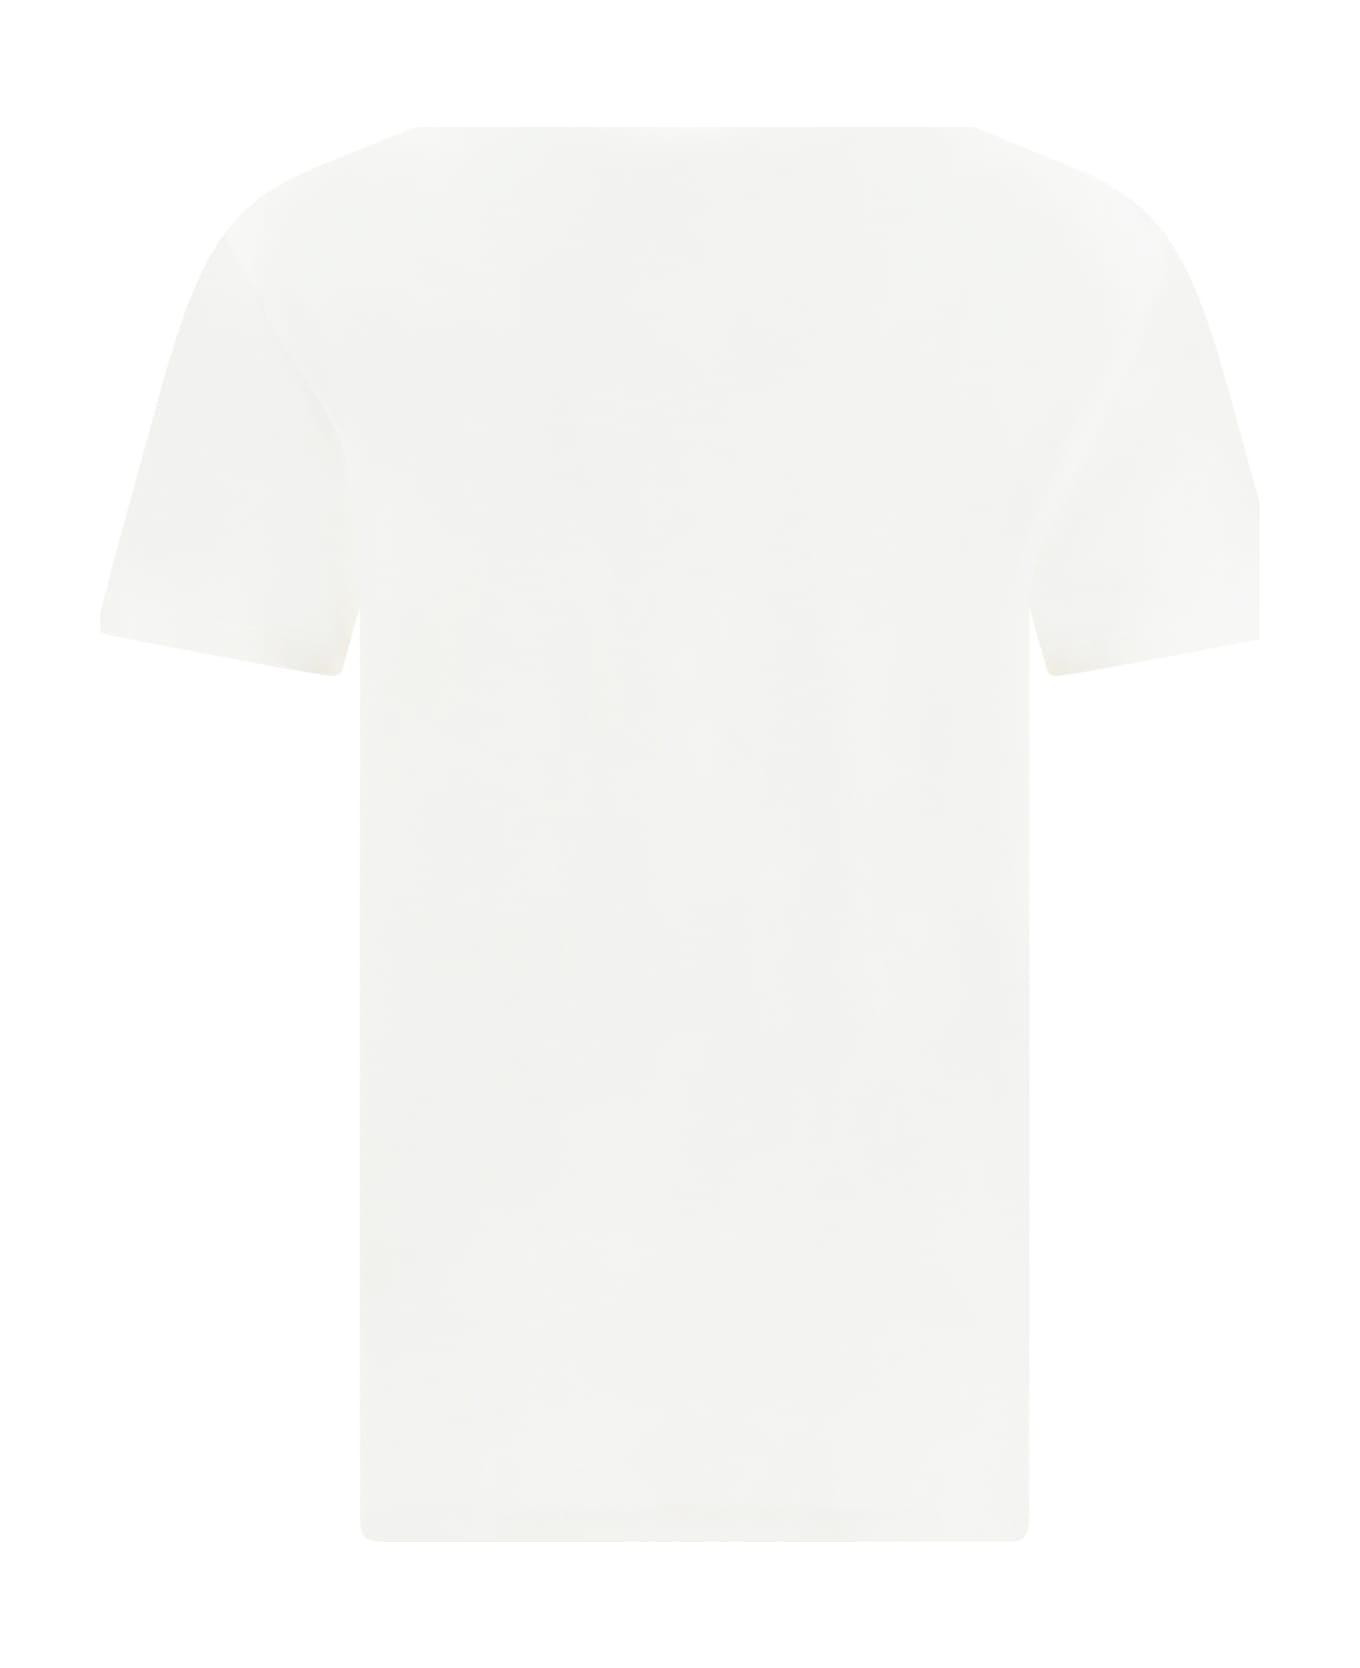 Jil Sander Ss T-shirt - BIANCO